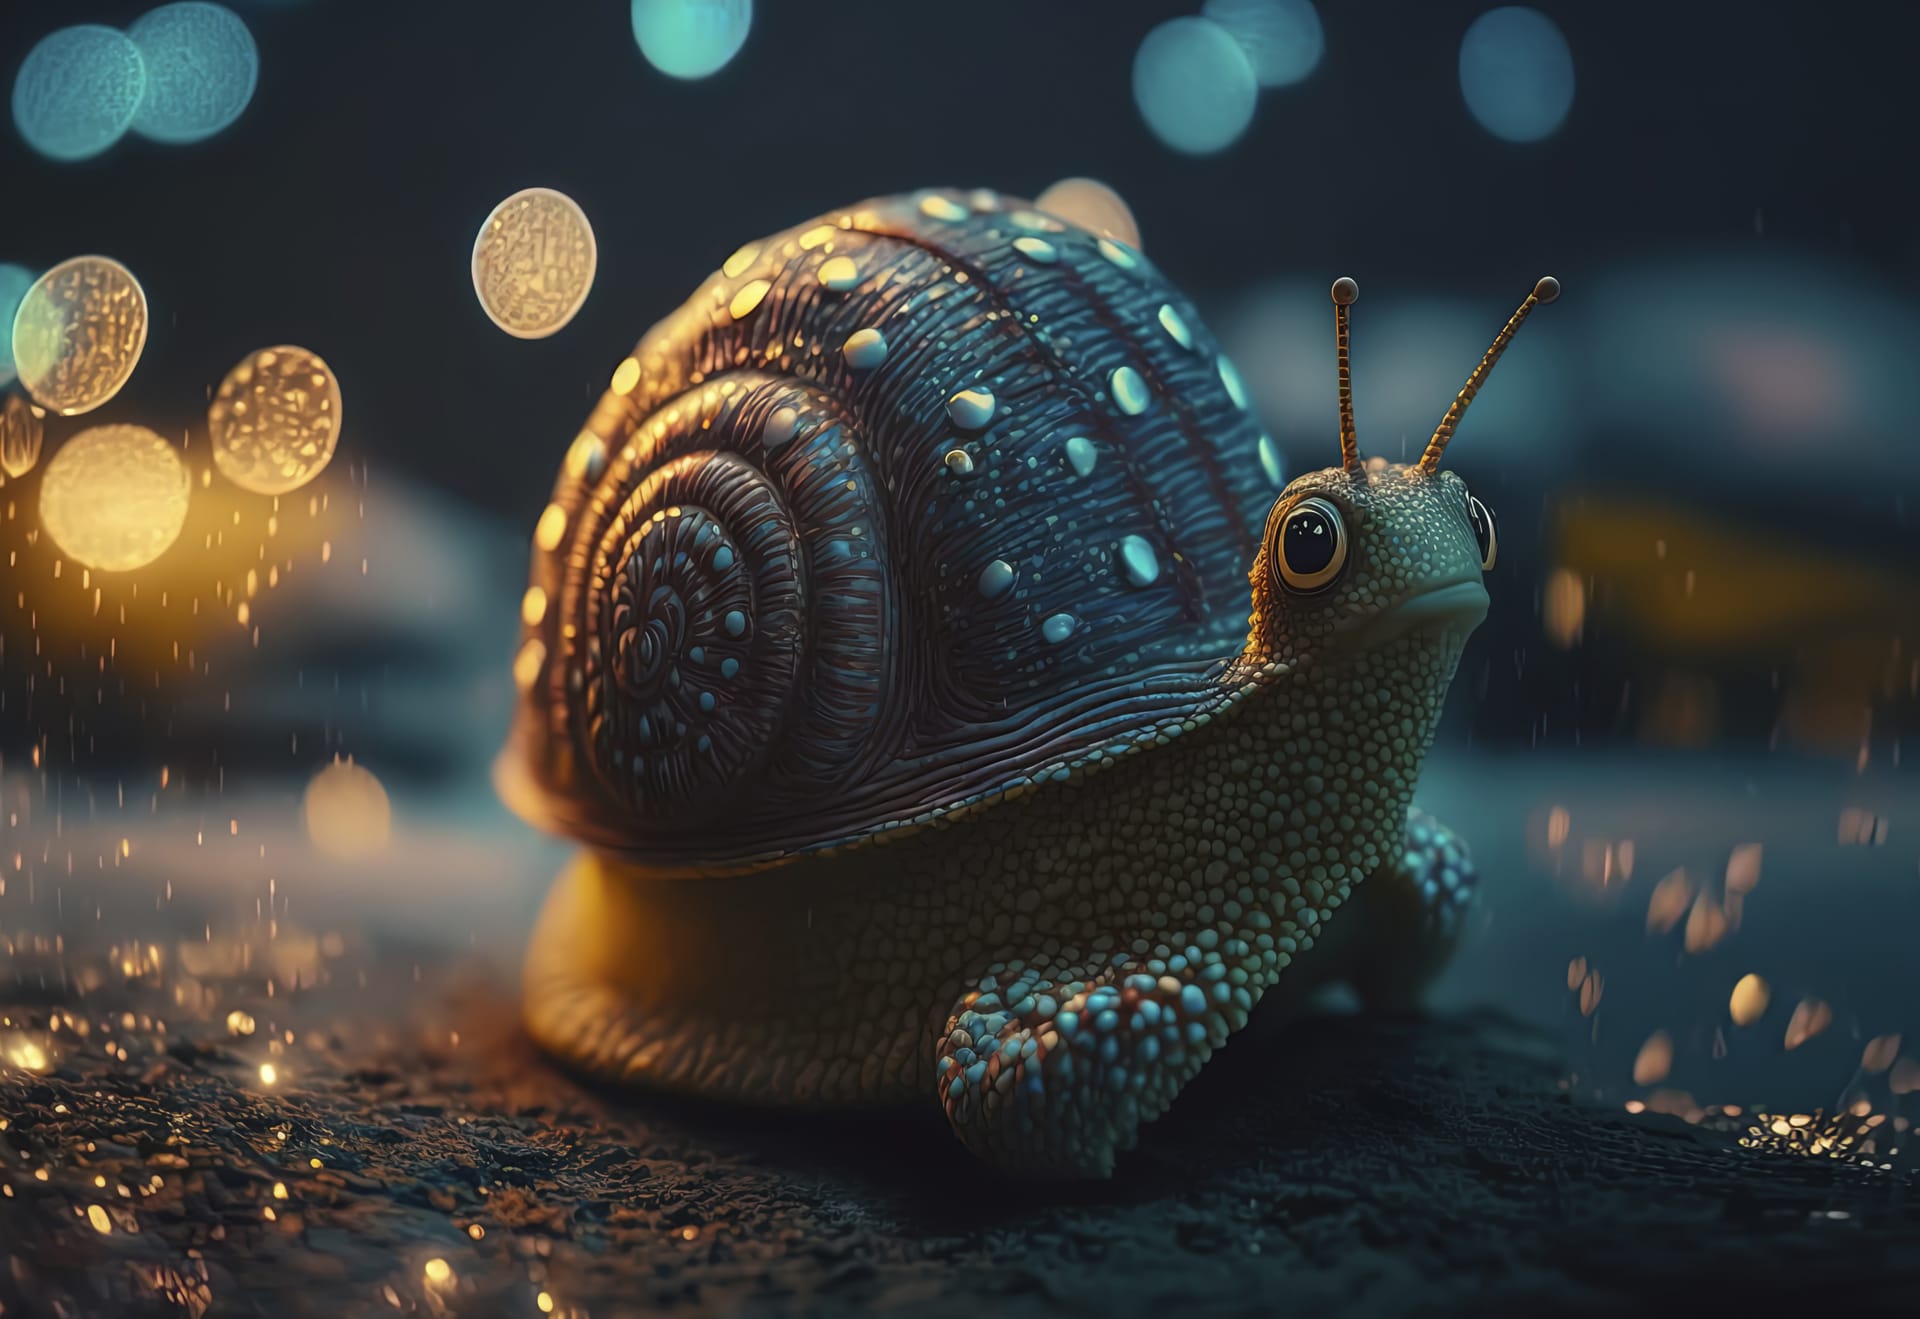 Snail closeup photo macro photography snail animal image